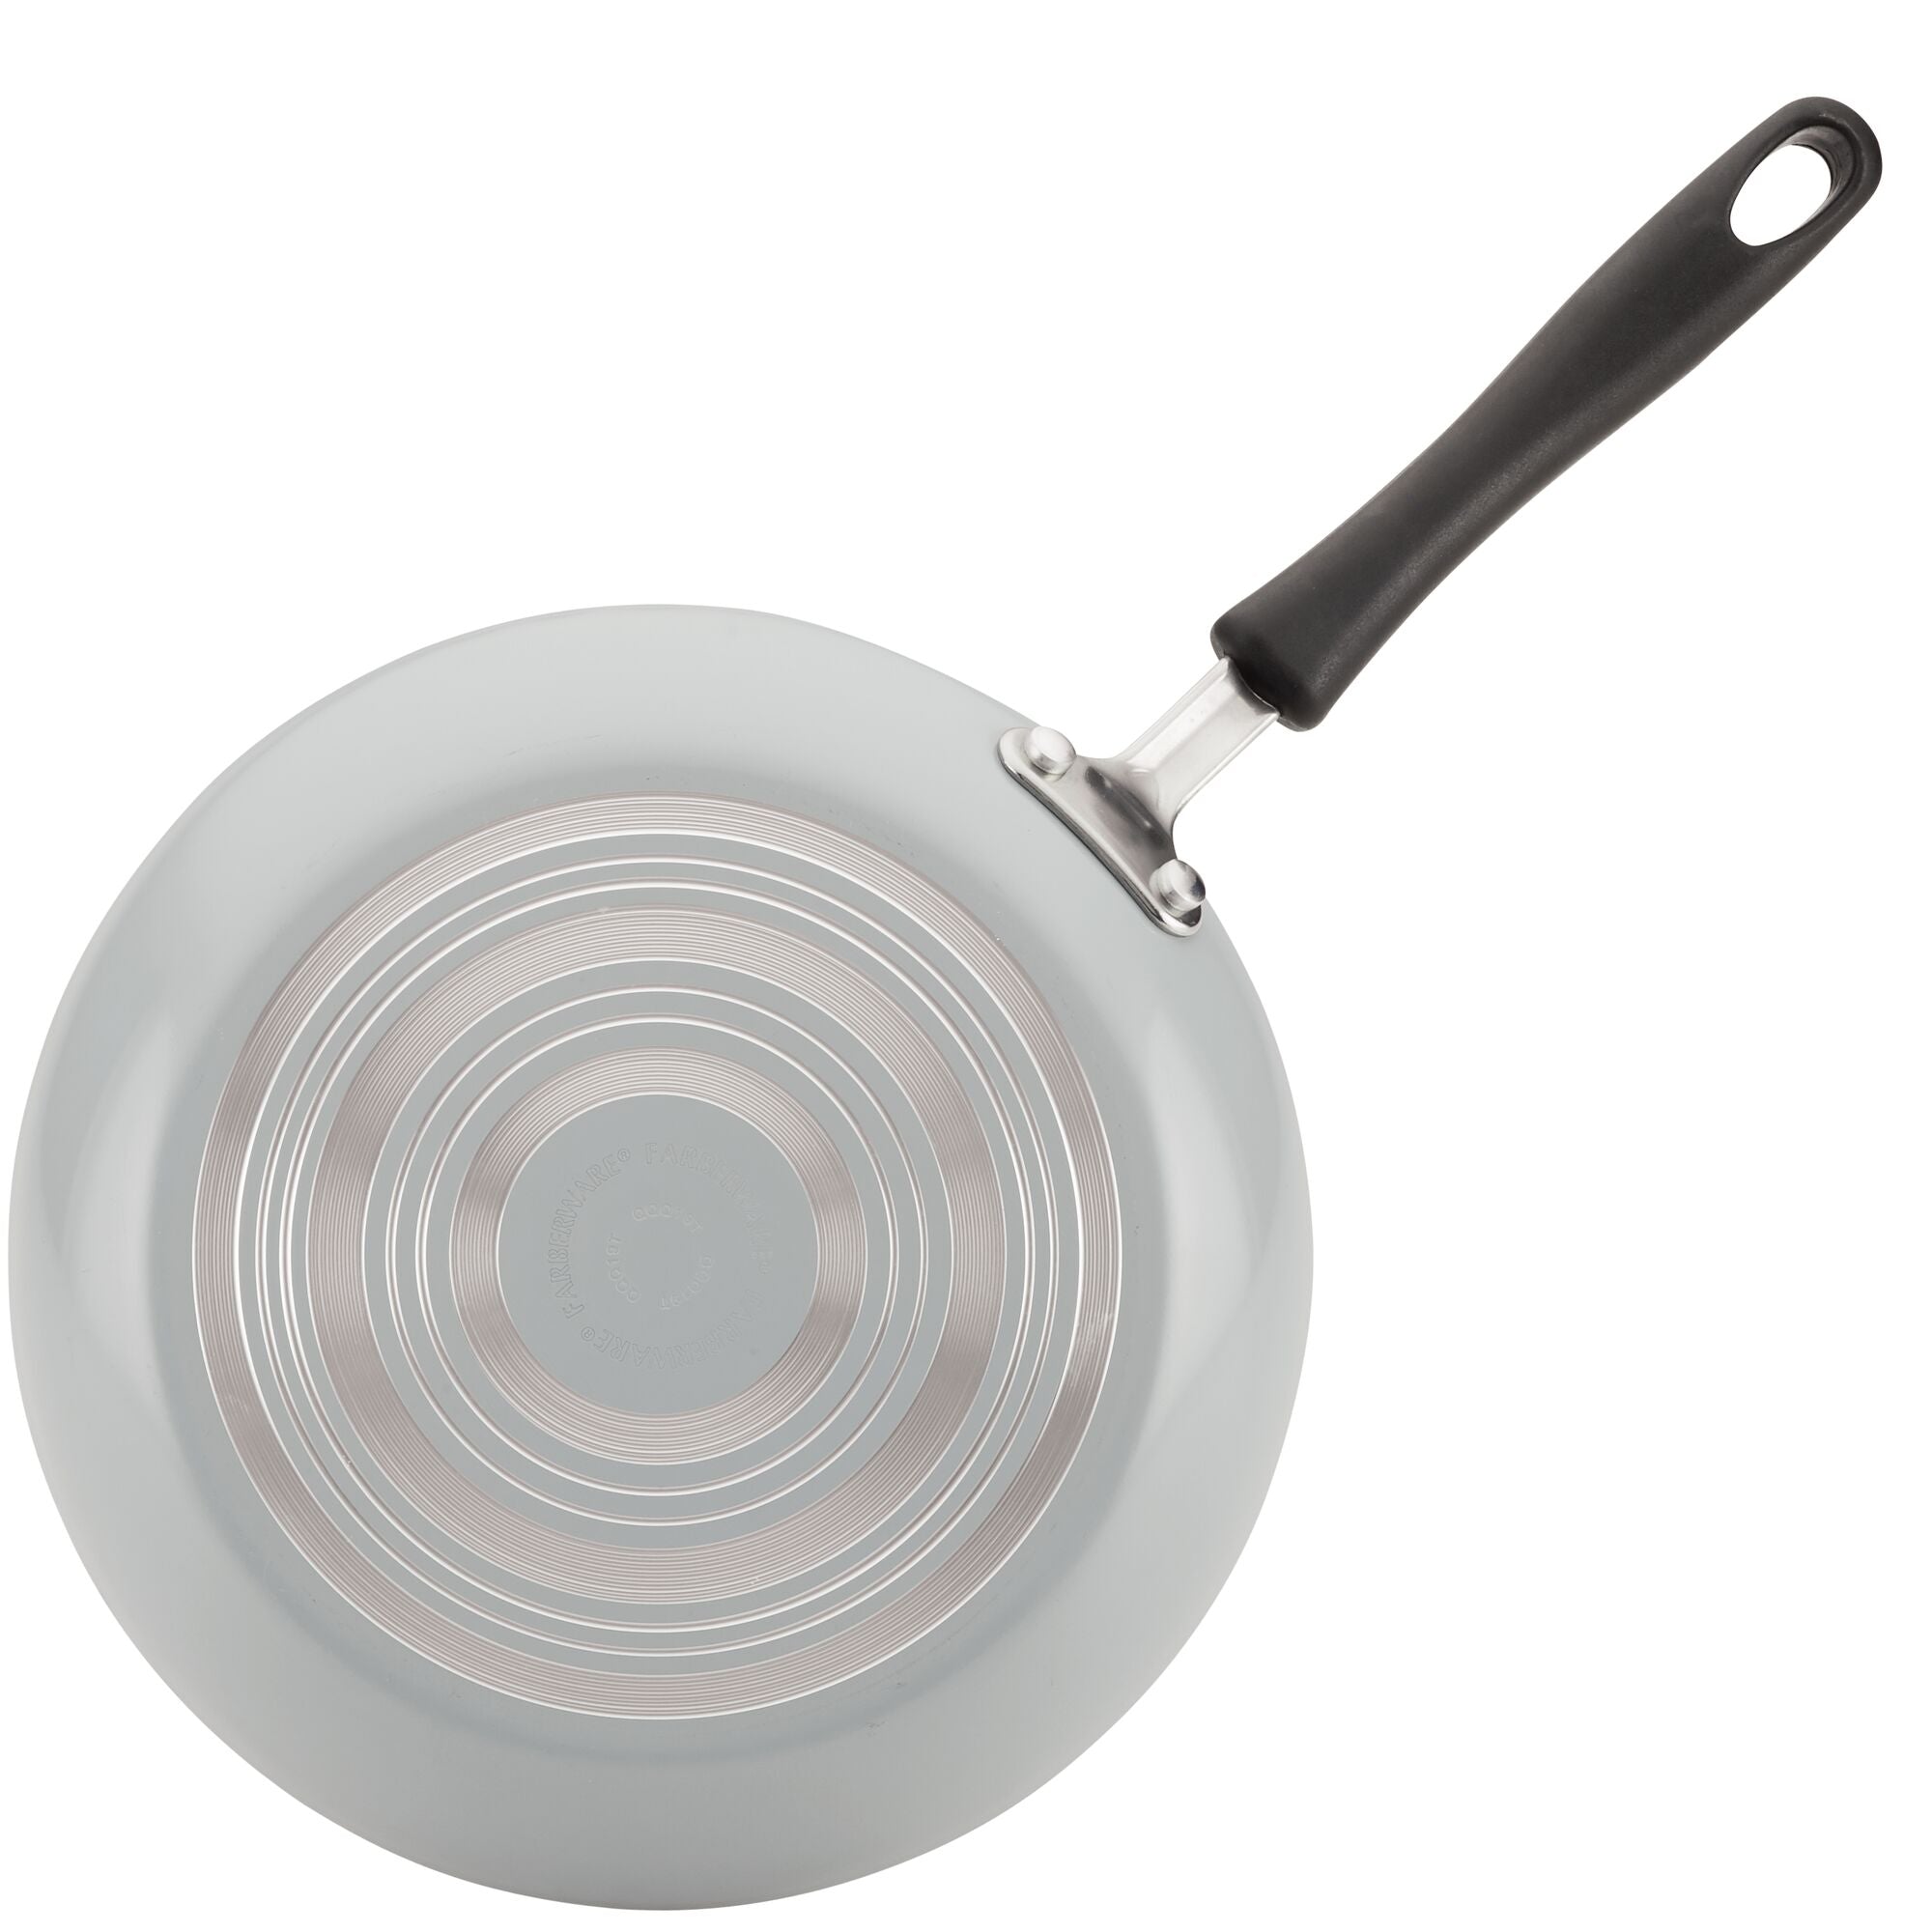 Farberware Easy Clean Aluminum Nonstick Cookware Pots and Pans Set